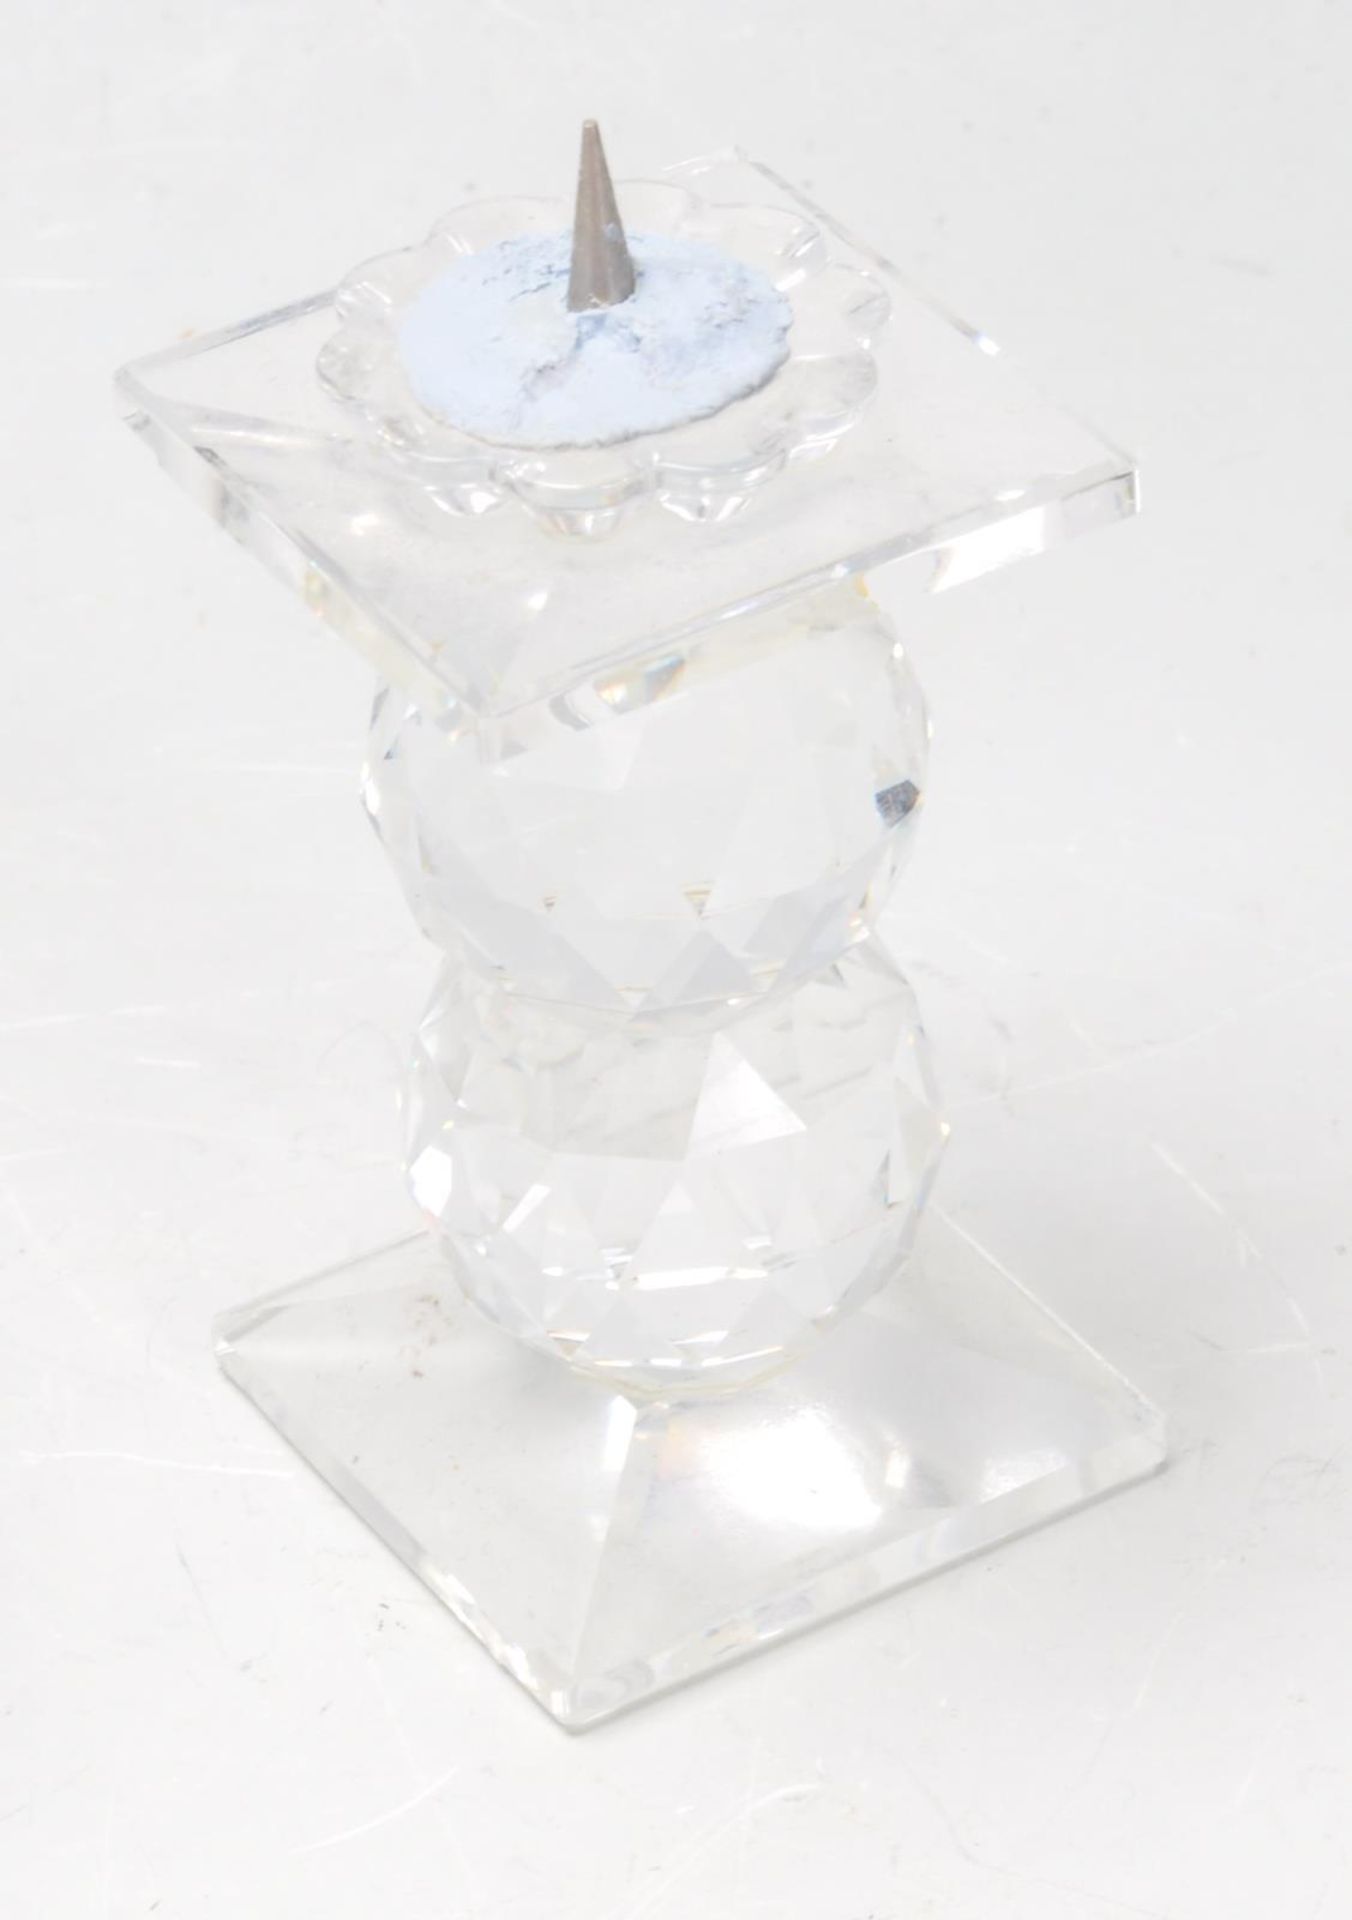 COLLECTION OF VINTAGE SWAROVSKI CRYSTAL GLASS ORNAMENTS - Image 5 of 6